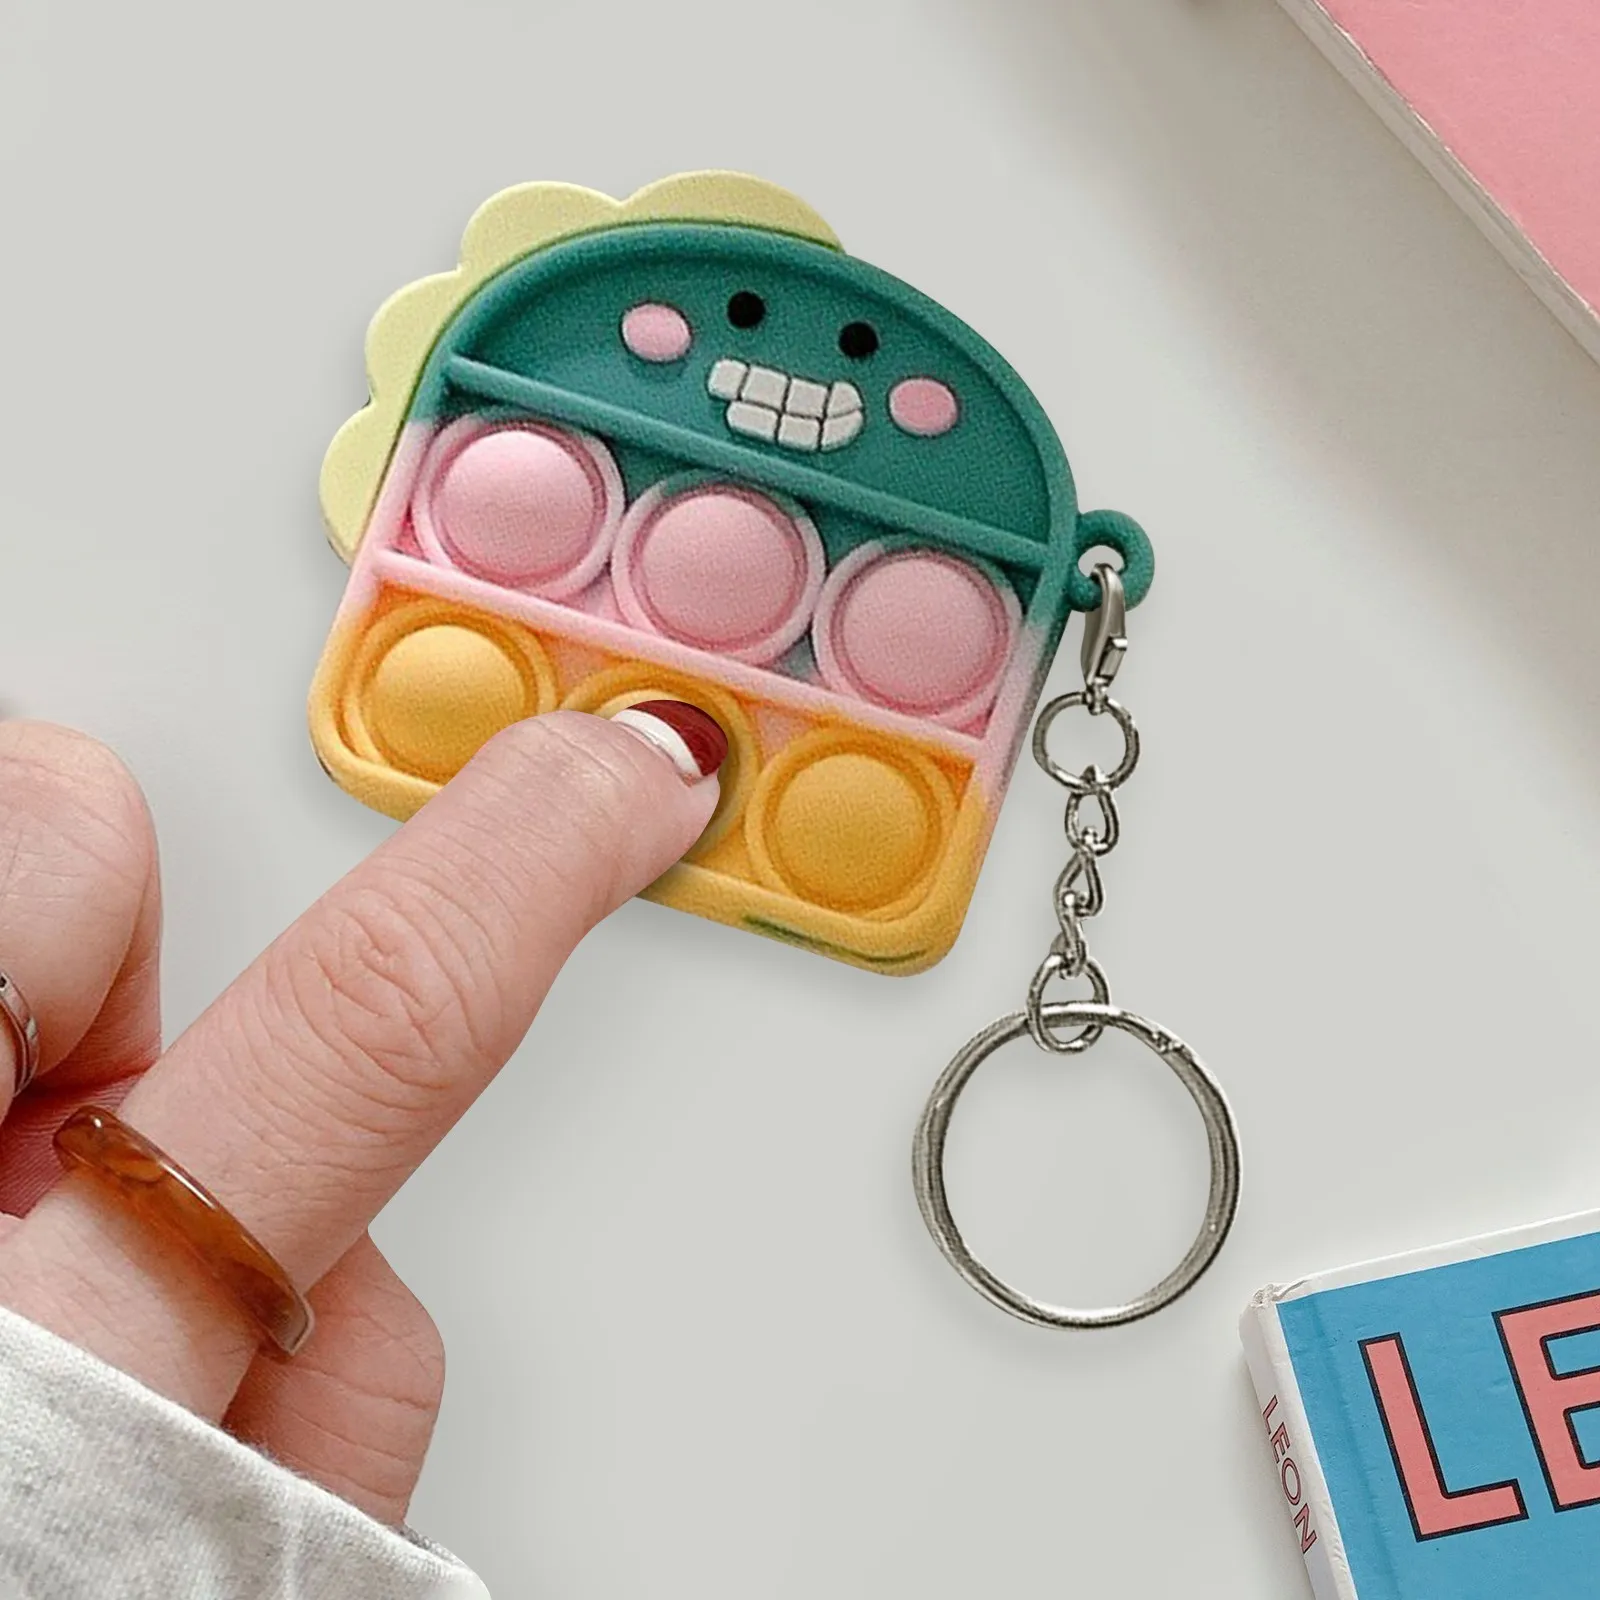 Cheap Mini Push Bubble Sensory Fidget Toys Keychain Simple Dimple Squishy Anti Stress Reliever For Adult Kids Popite Fidget Toy atomic nee dohs